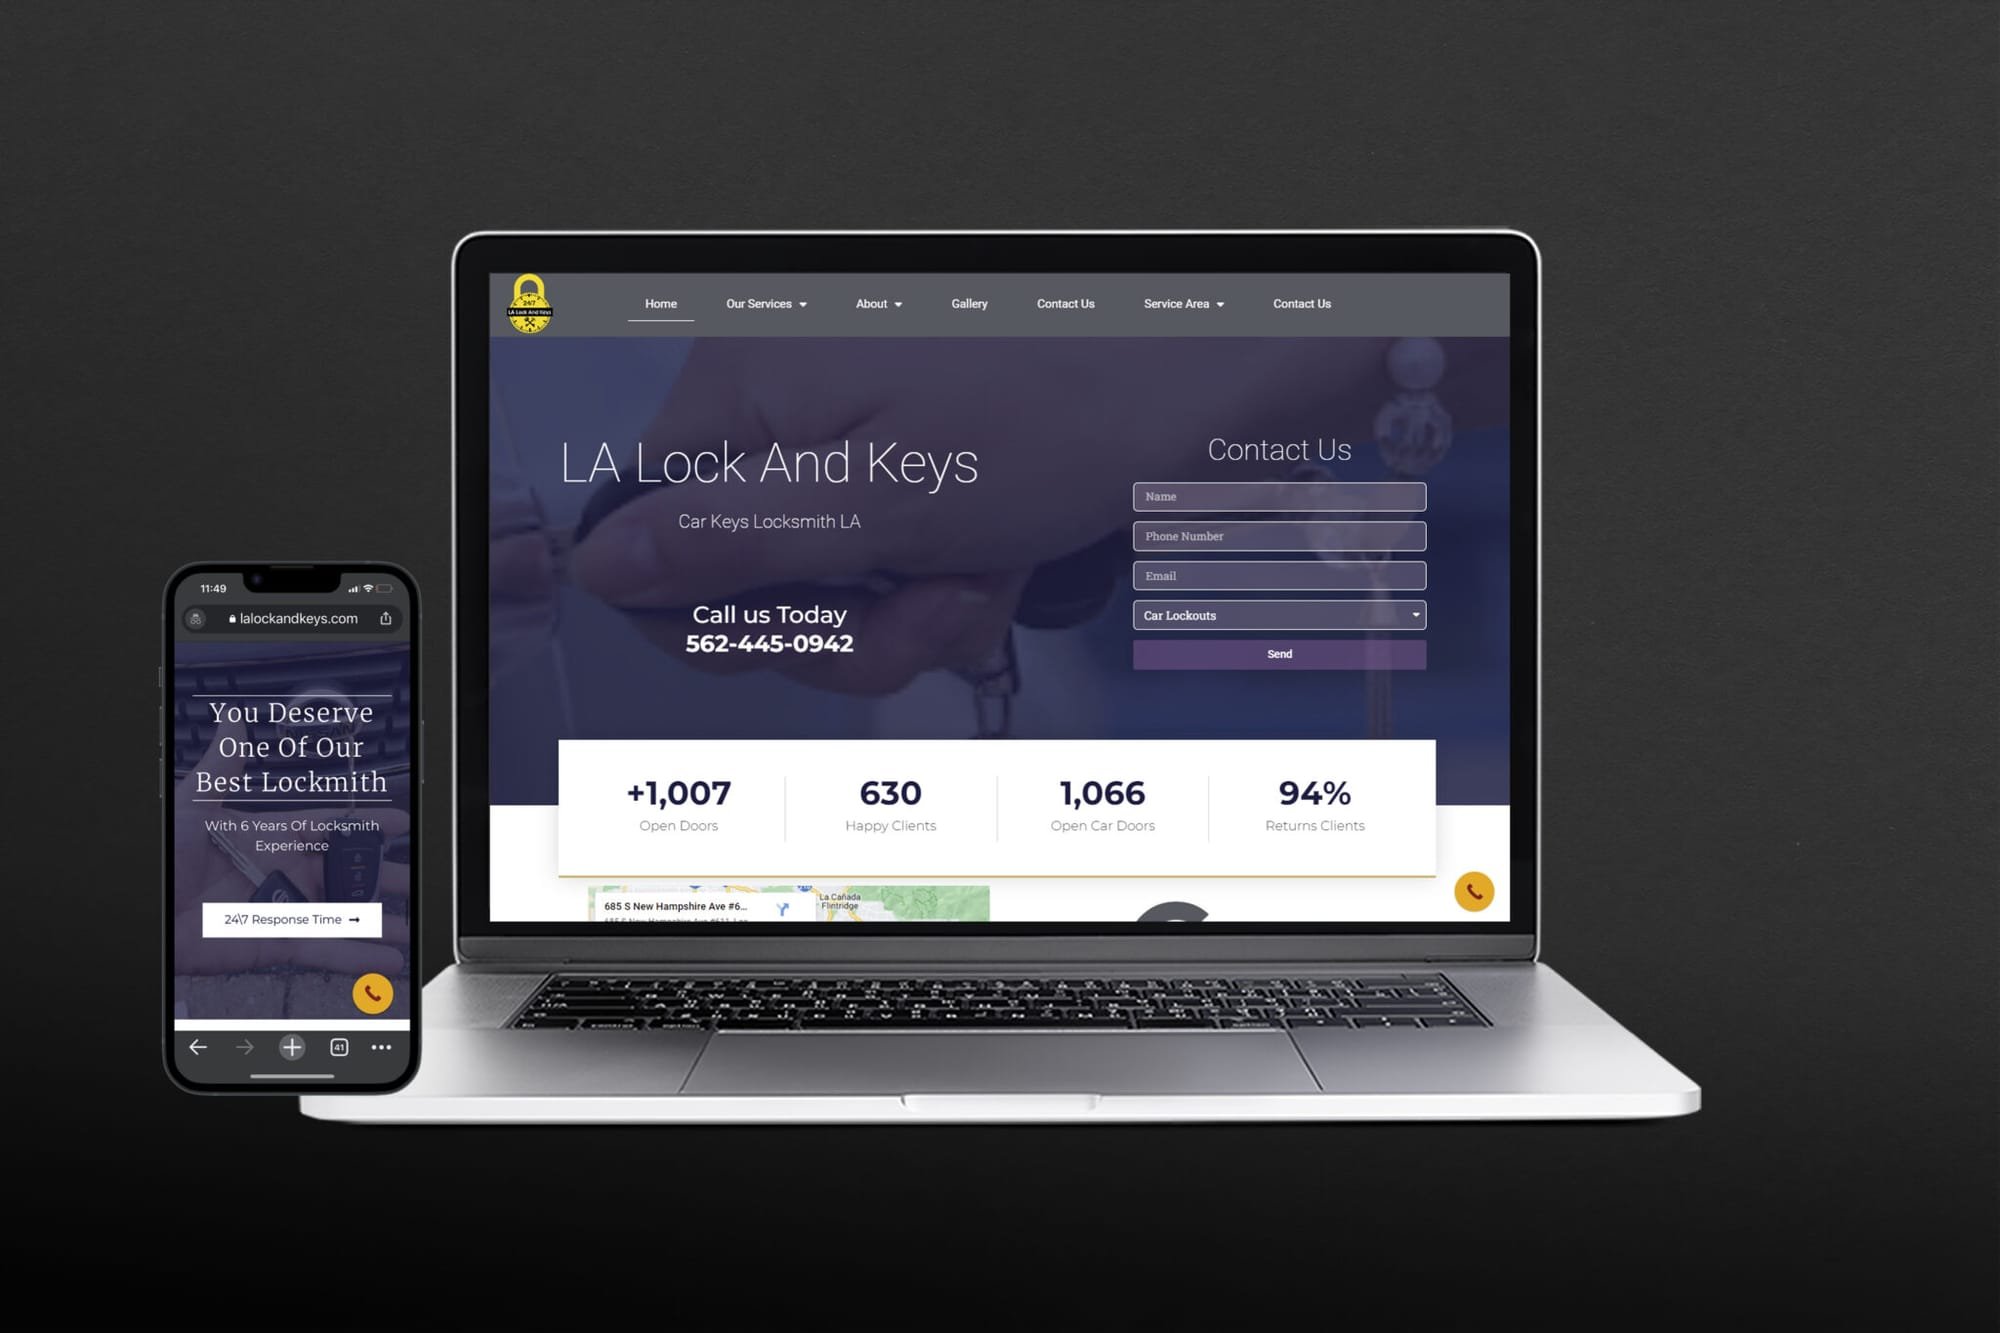 LA Lock And Keys